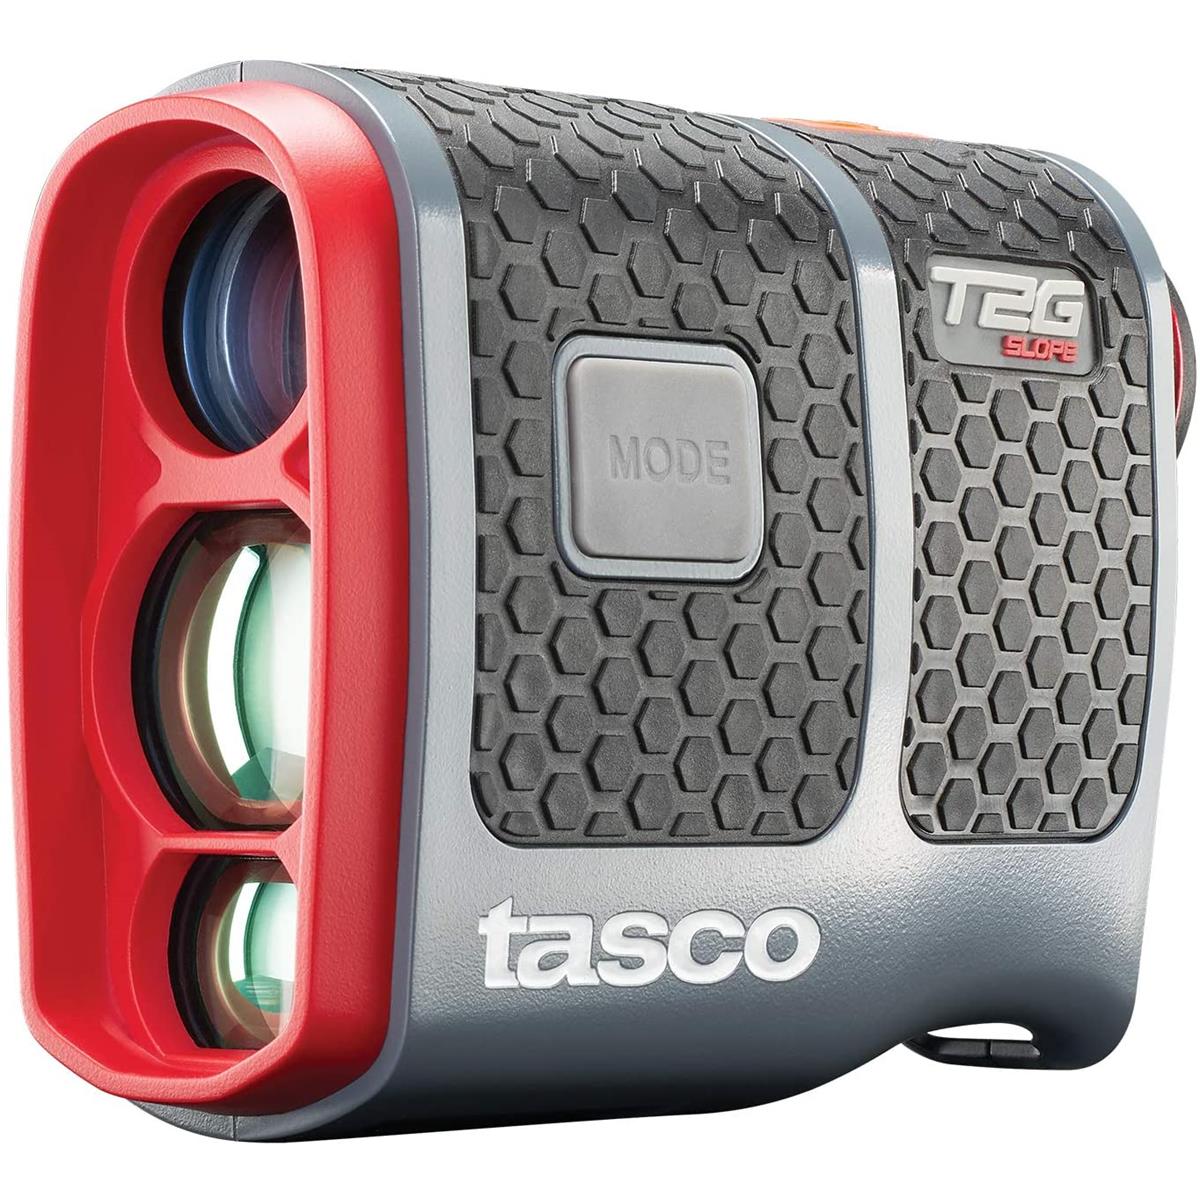 Tasco T2G Slope Golf Laser Rangefinder $69 + Free Shipping